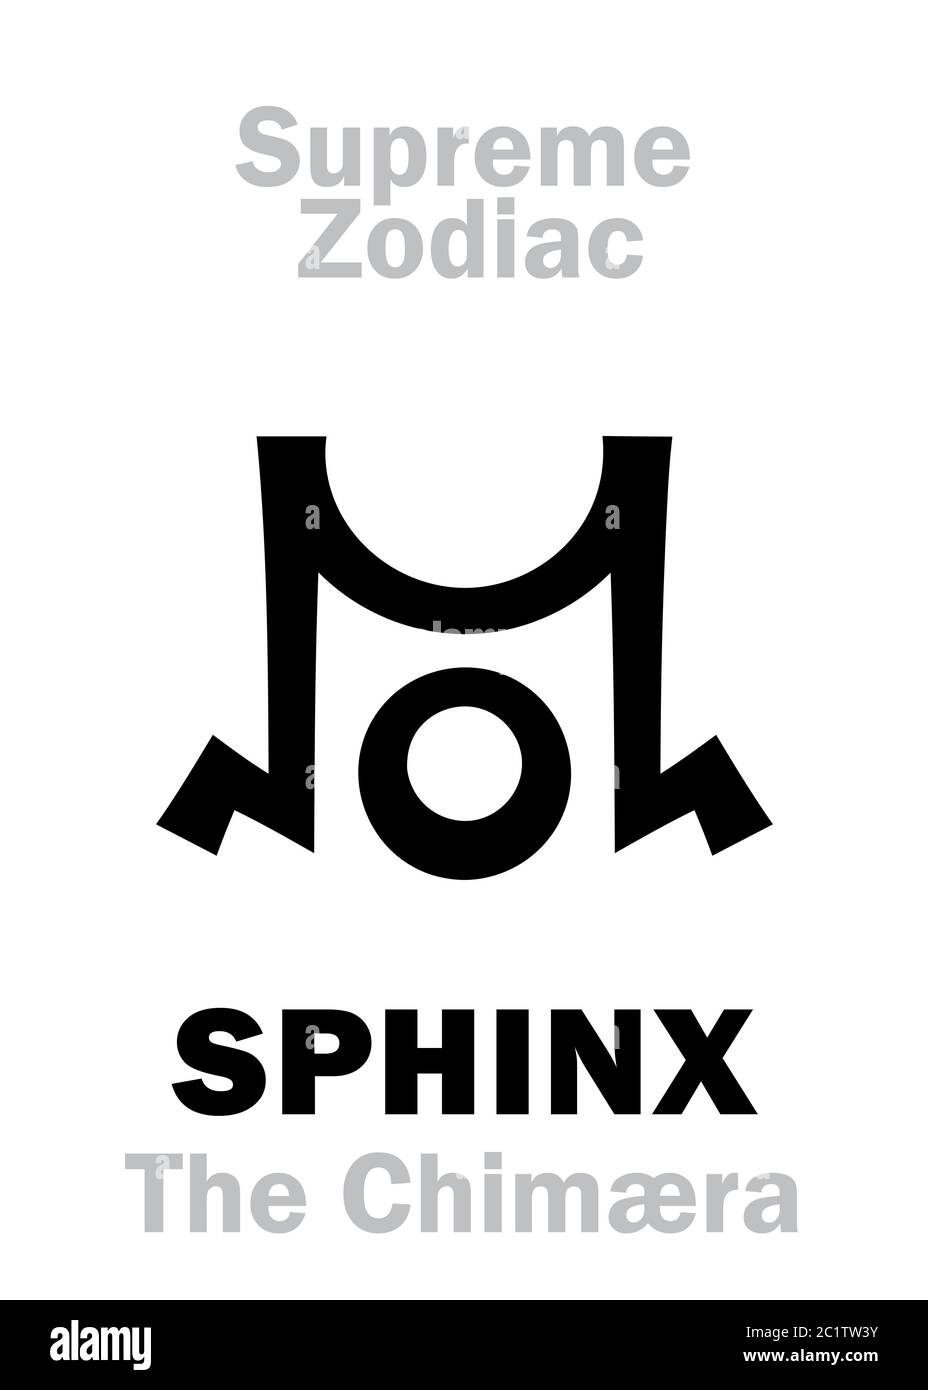 Astrology: Supreme Zodiac: SPHINX (The Chimæra)  Cygnus («The Northern Cross») Stock Photo